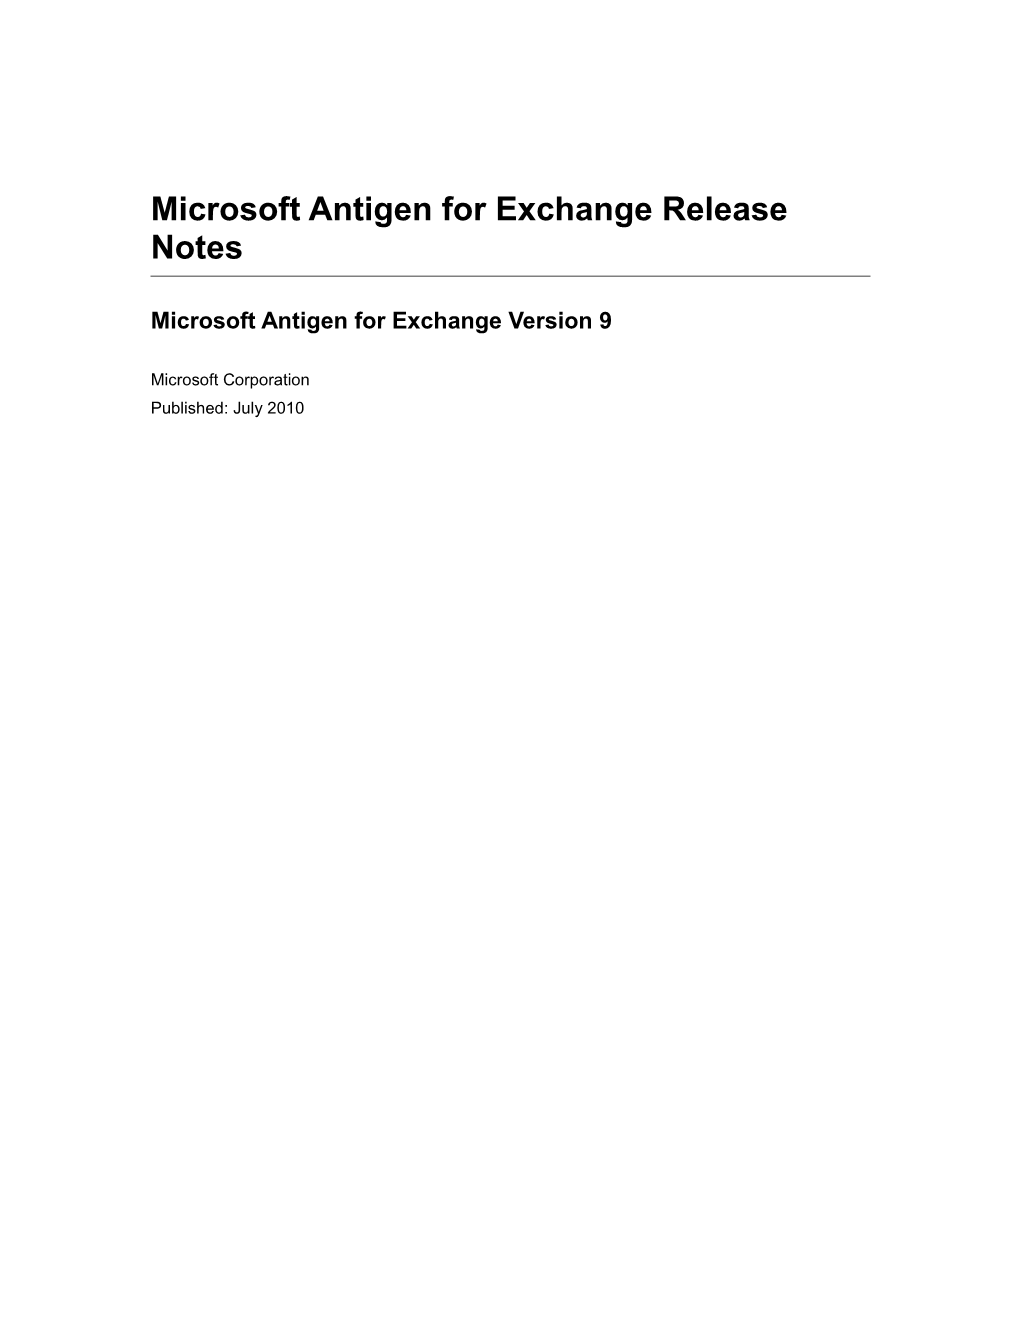 Microsoft Antigen for Exchange Release Notes